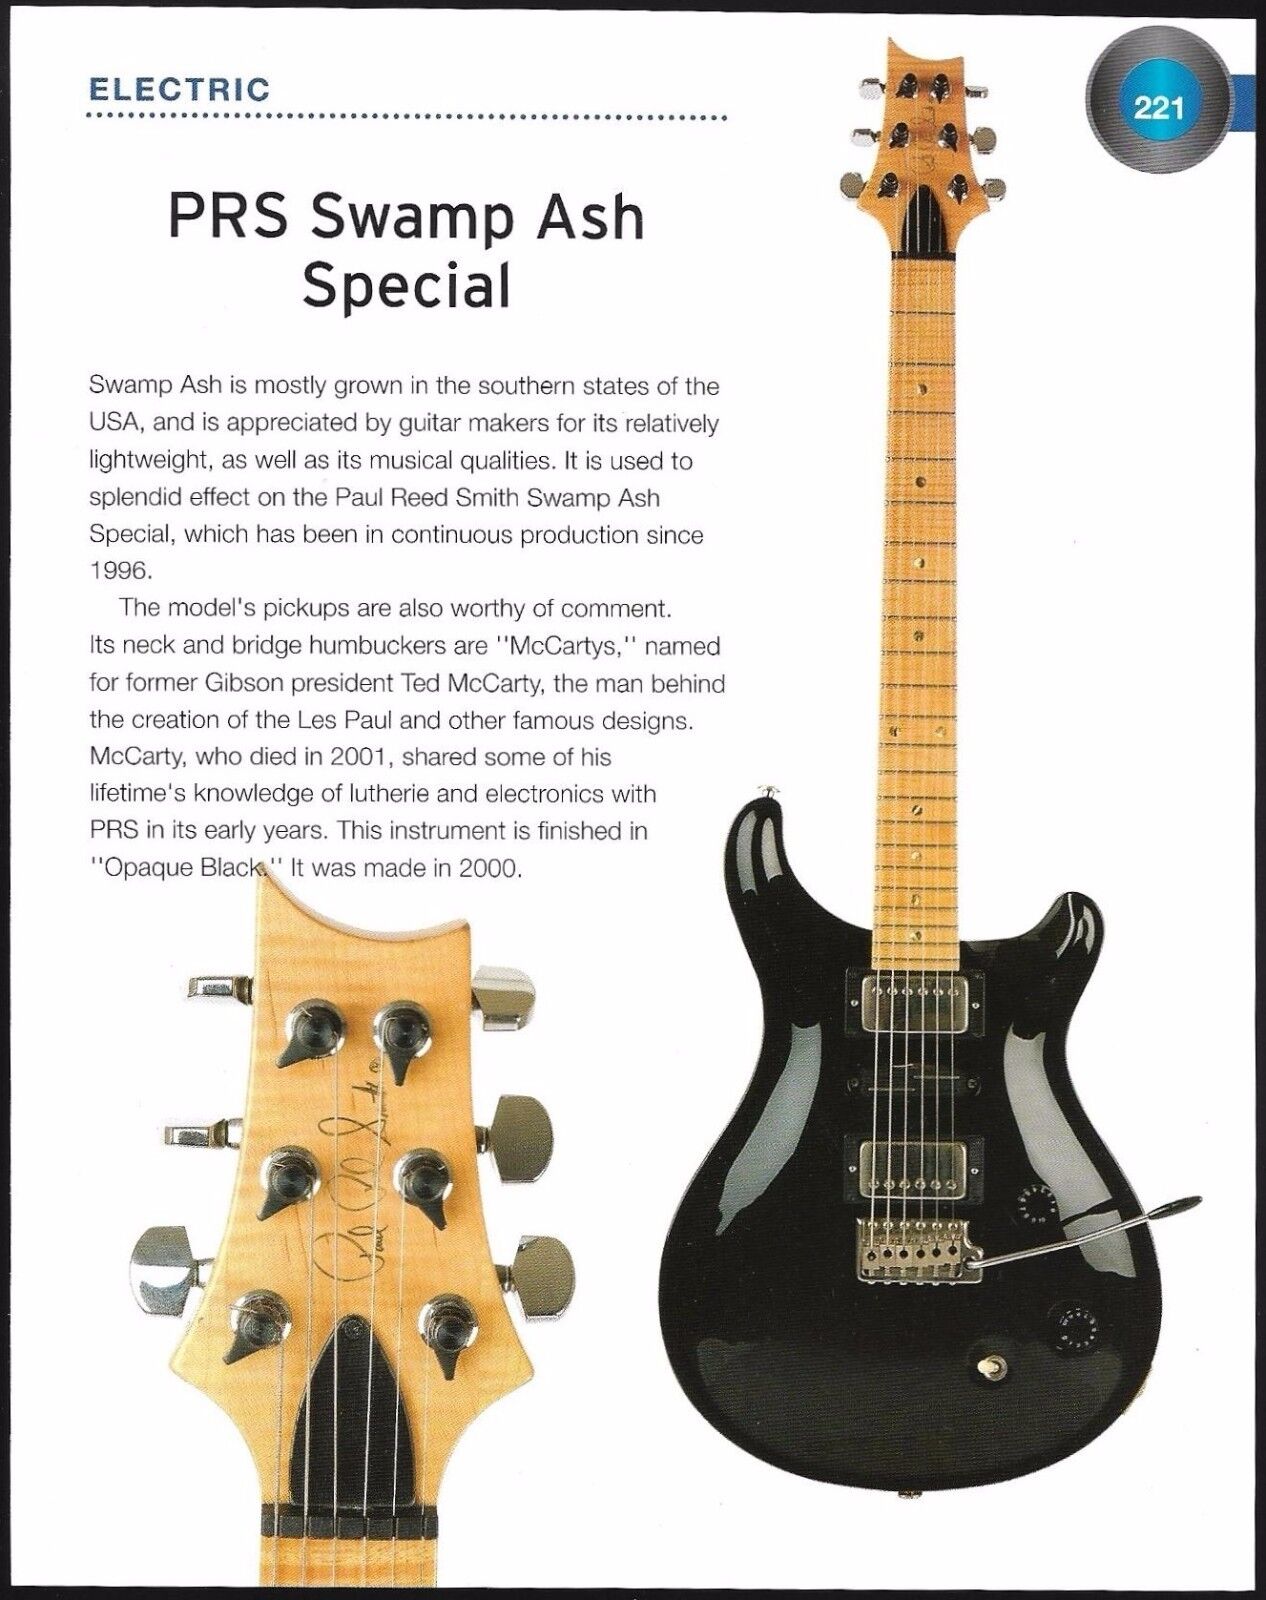 PRS Swamp Ash Special + 1935 Radiotone Archtop guitar 6 x 8 history article